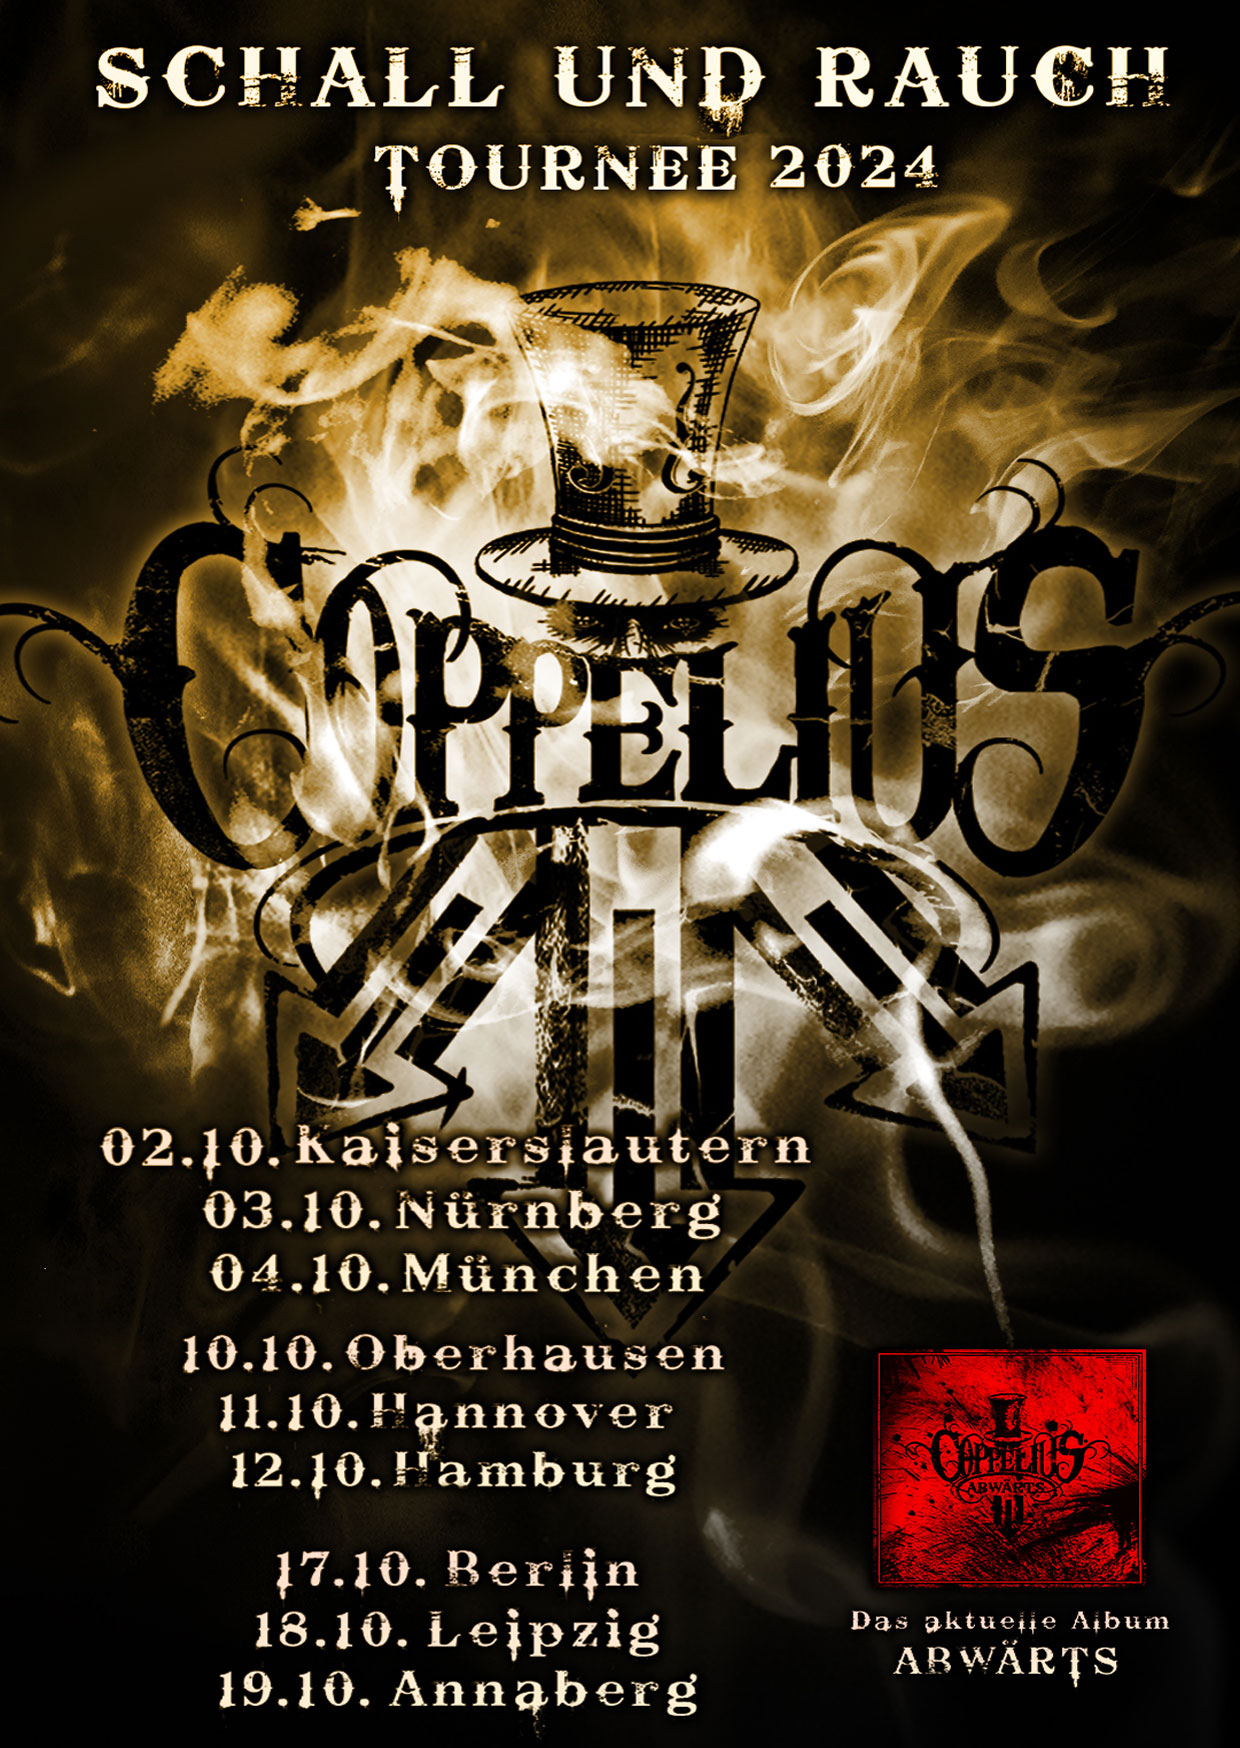 Coppelius - Schall and Rauch Tournee 2024 in der Hole 44 Tickets